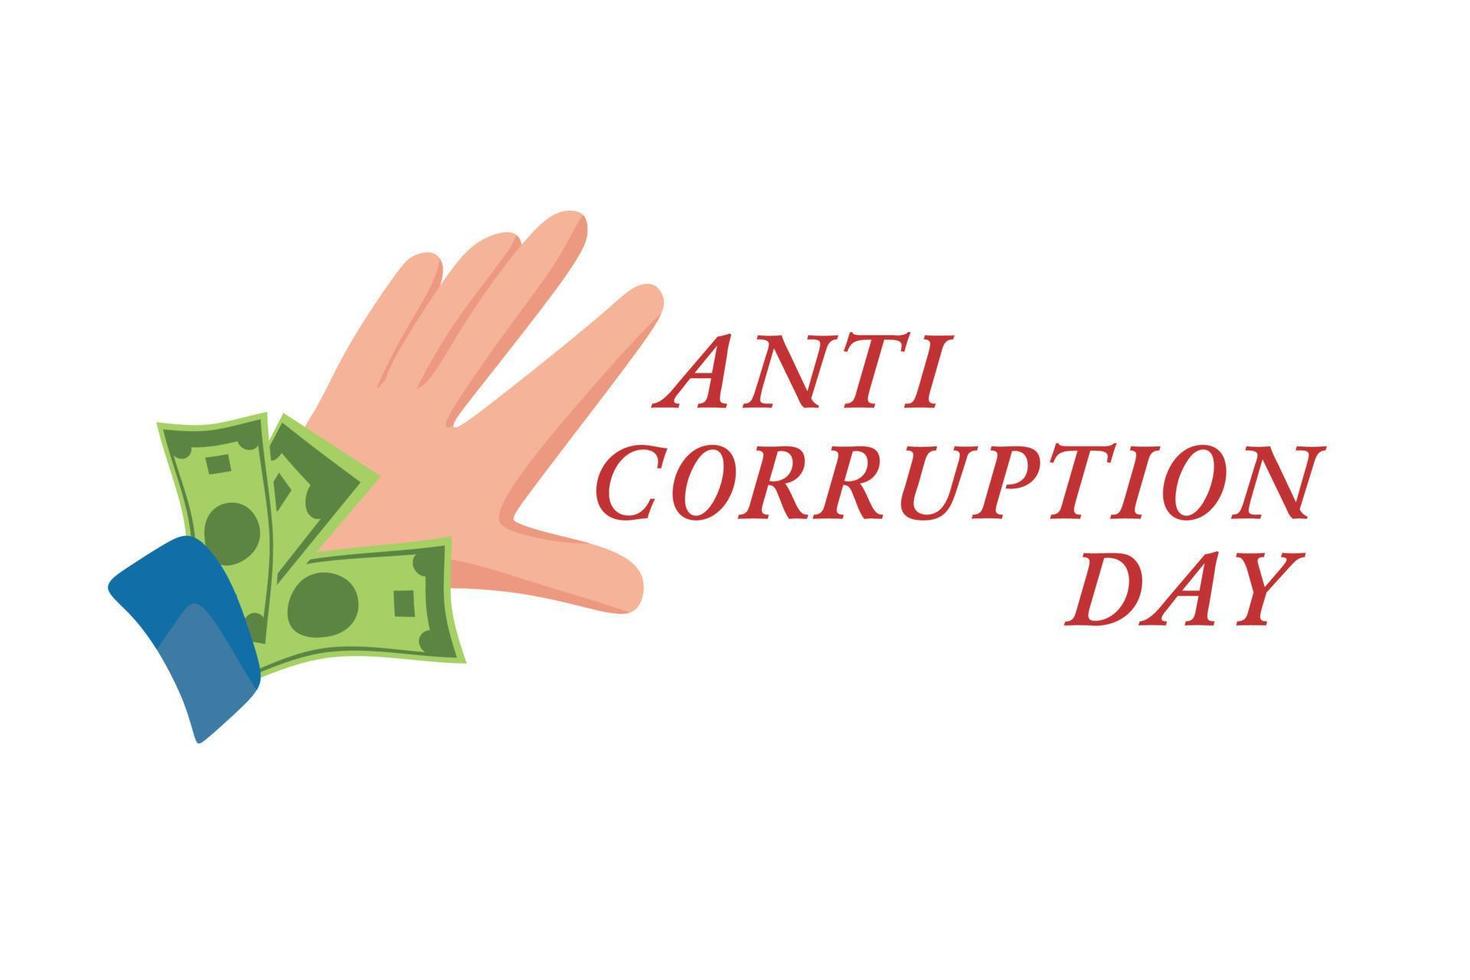 International Day Against Corruption, 9 December. poster or publication on the Internet. Vector cartoon illustration.